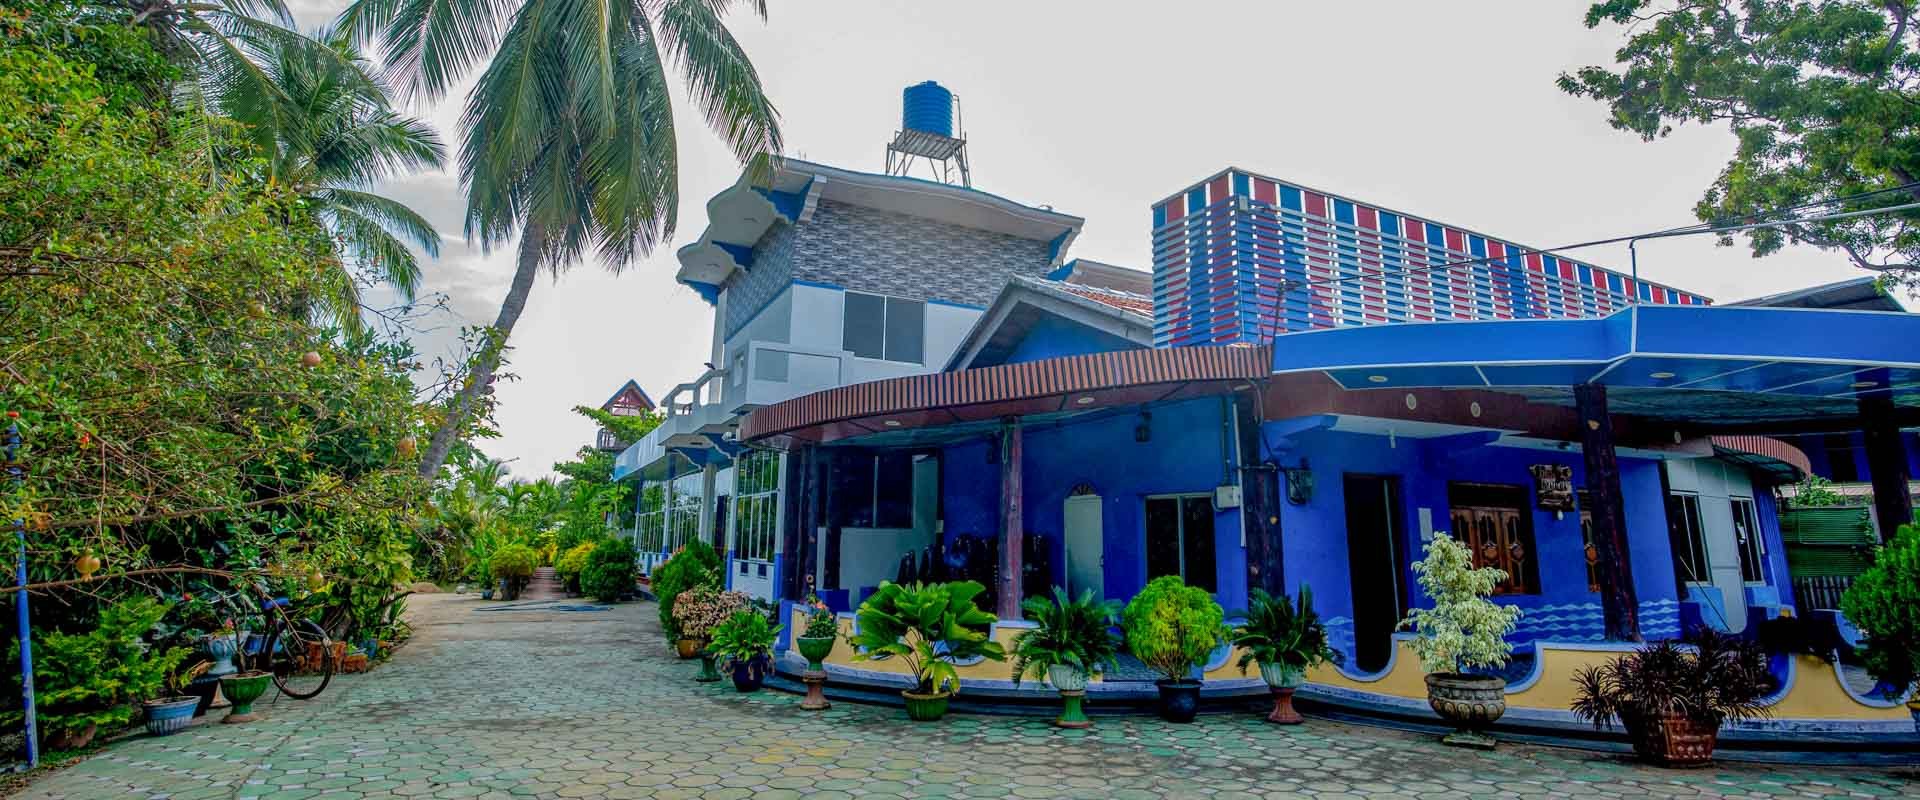 Blue Lagoon Rest Inn - Gateway to East